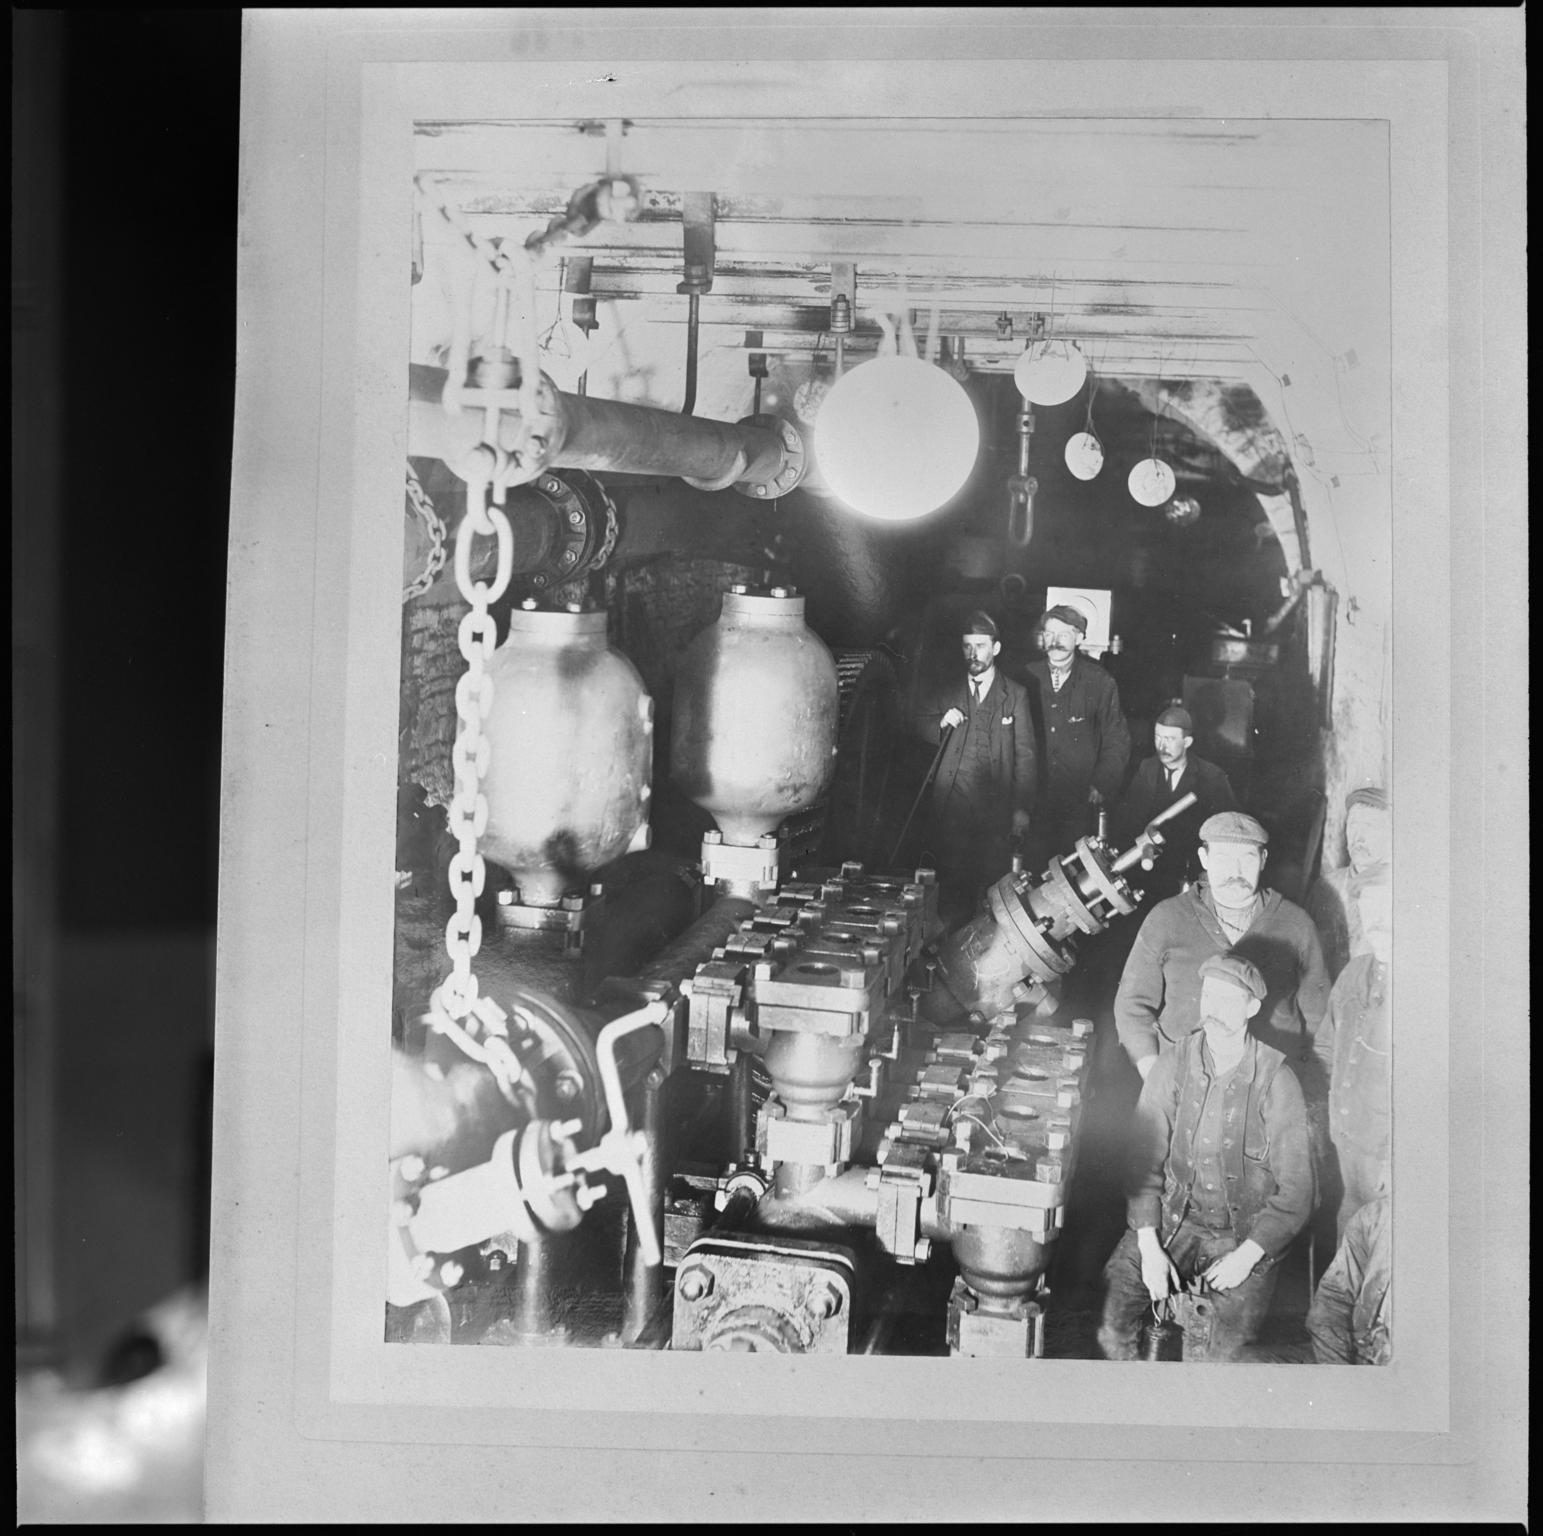 Nixon's Navigation Colliery, film negative